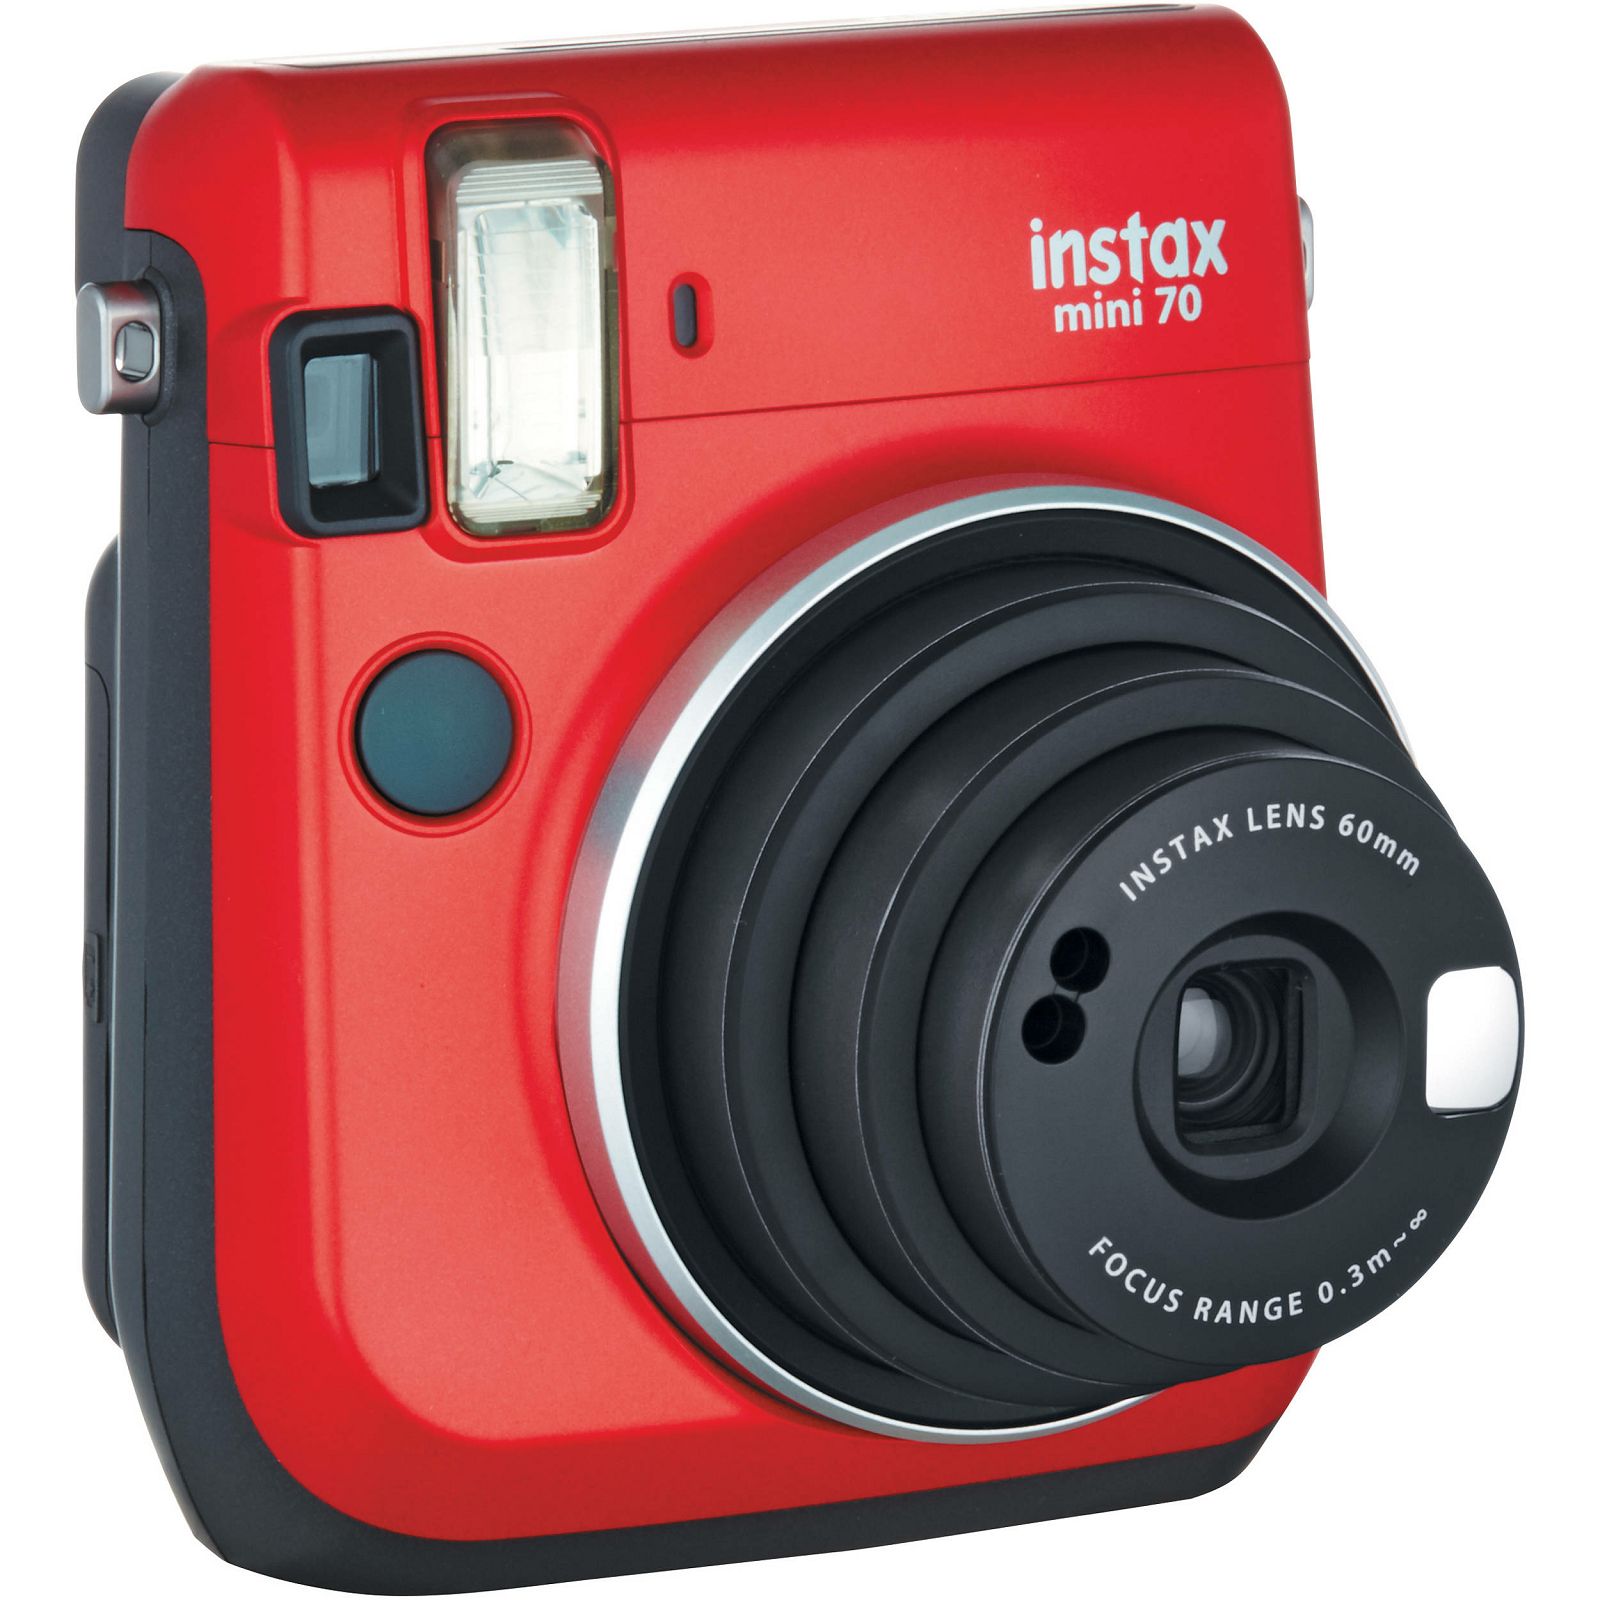 Fujifilm Instax mini 70 Instant Film Camera (Red) Crveni Fuji polaroidni fotoaparat s trenutnim ispisom fotografije